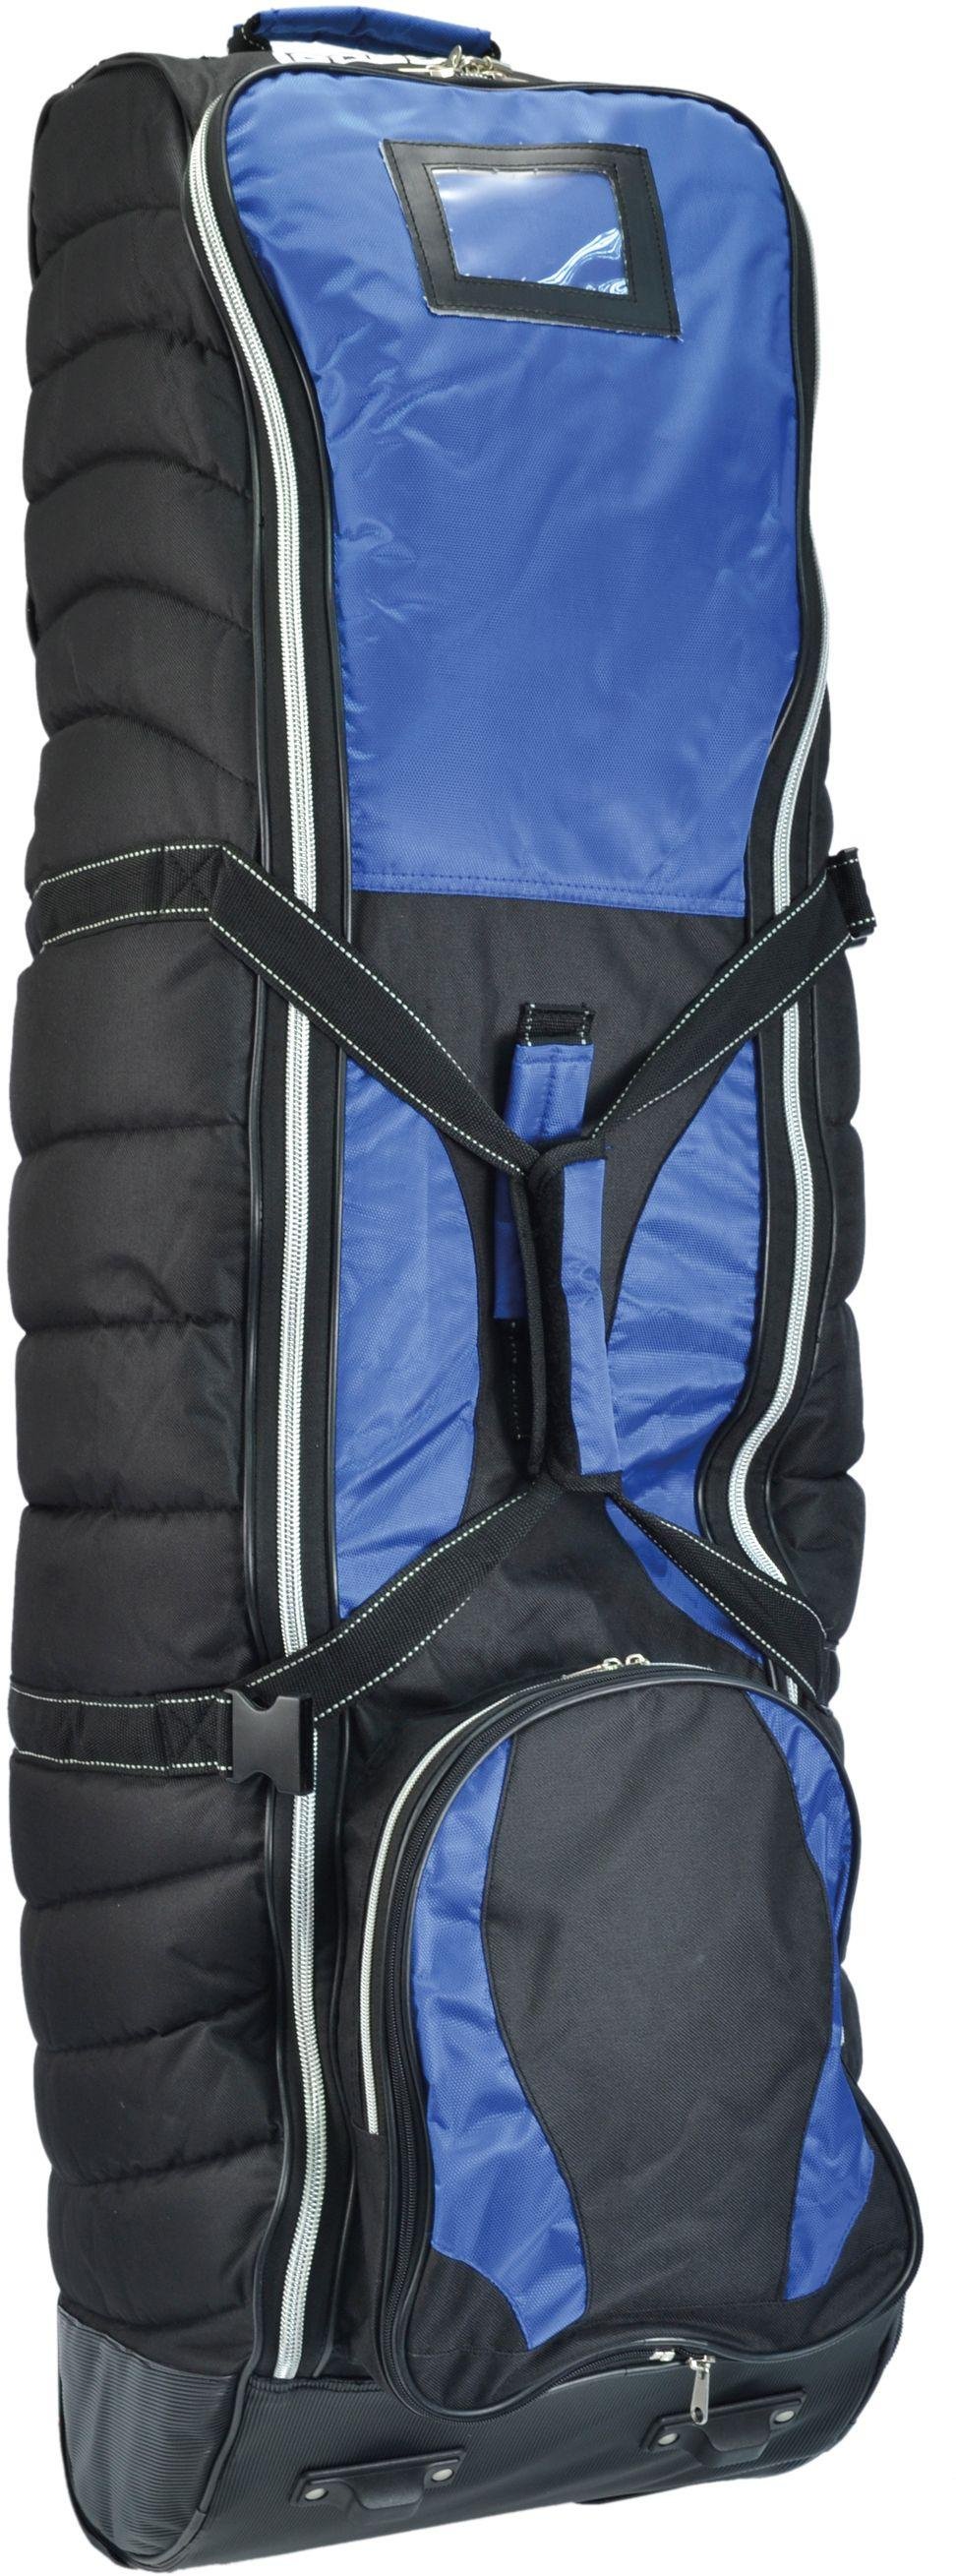 Longridge Deluxe Roller Travel Cover For Golf Bags